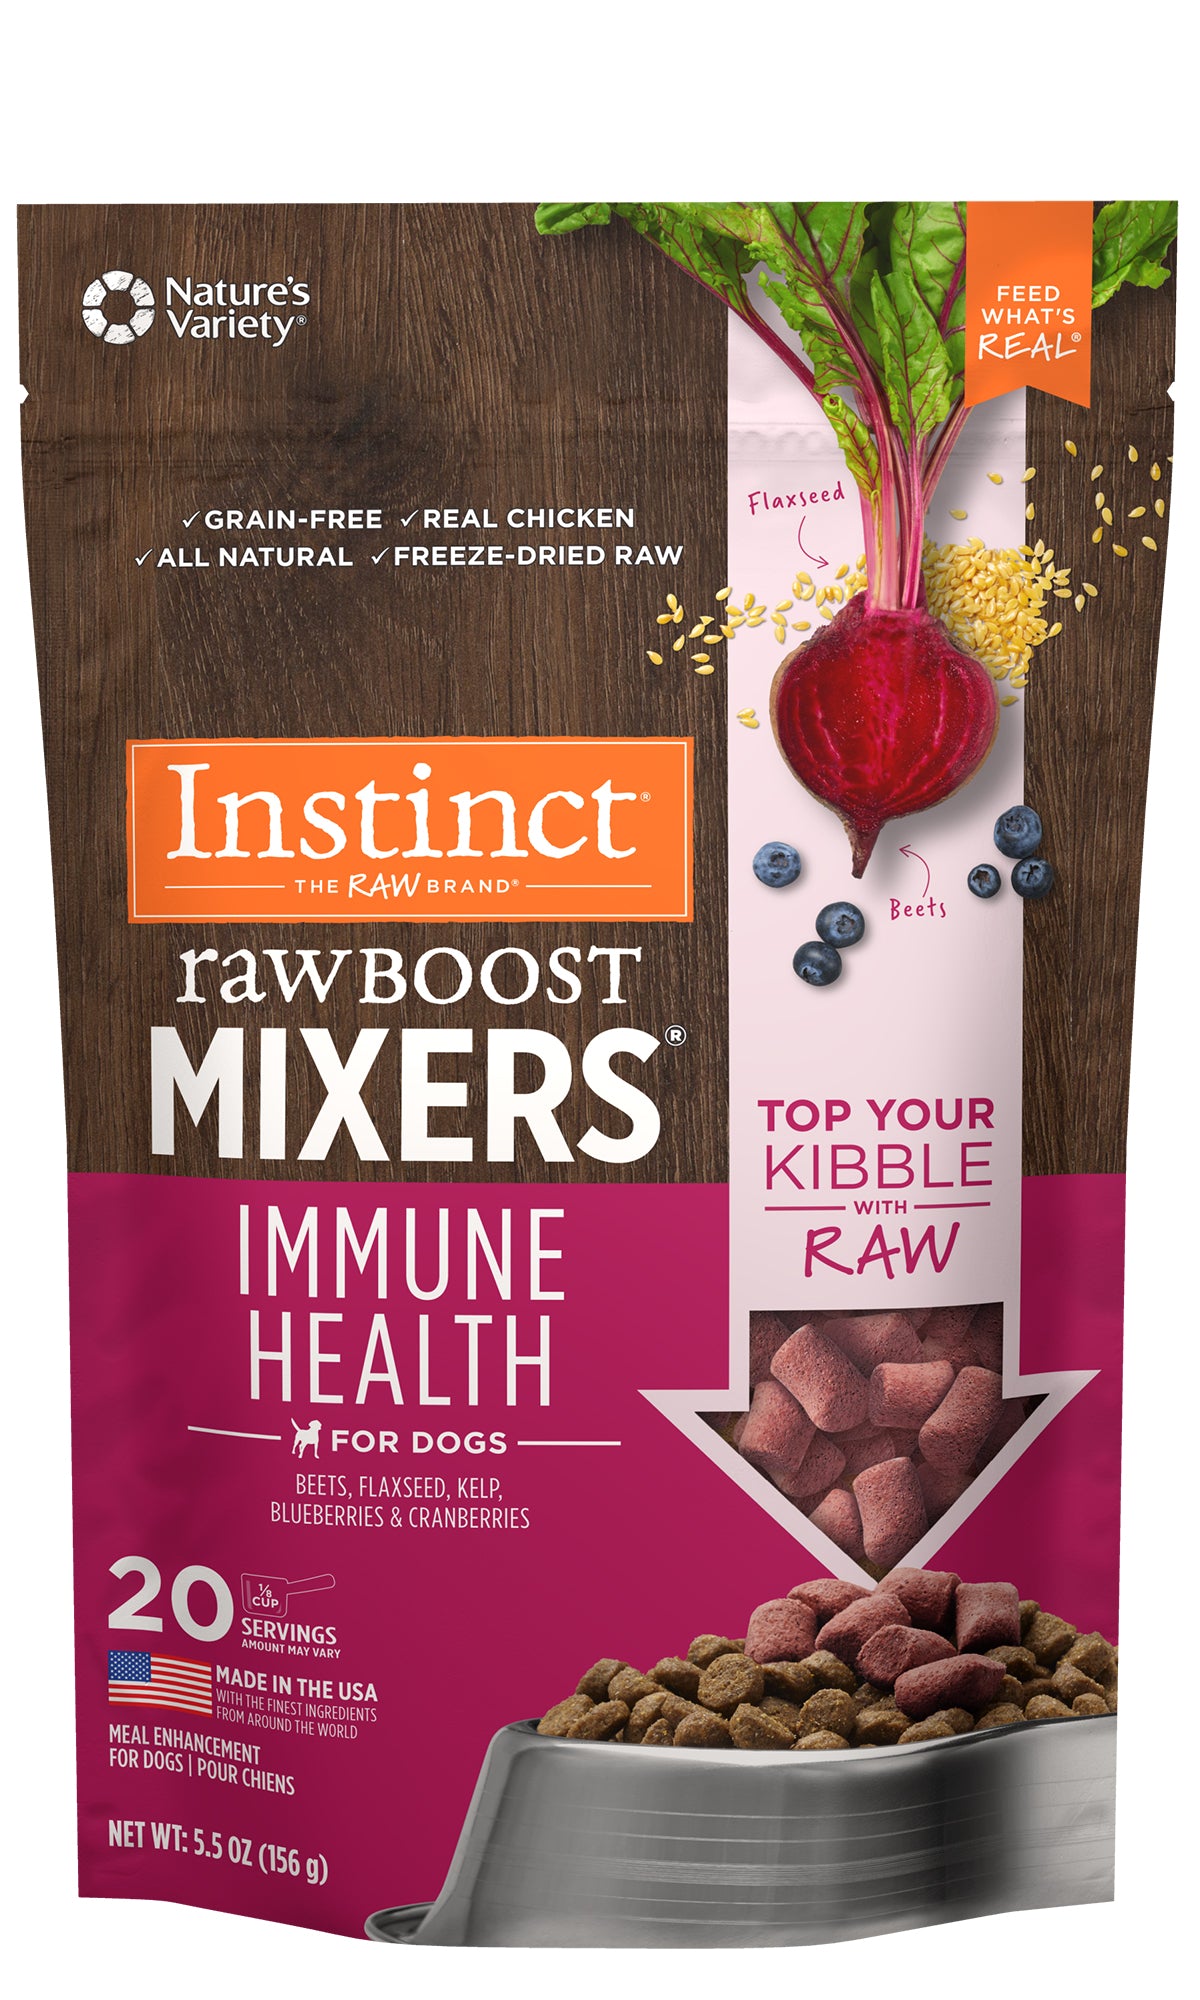 Instinct Dog RawBoost Mixers IMMUNE HEALTH (5.5oz/156g)